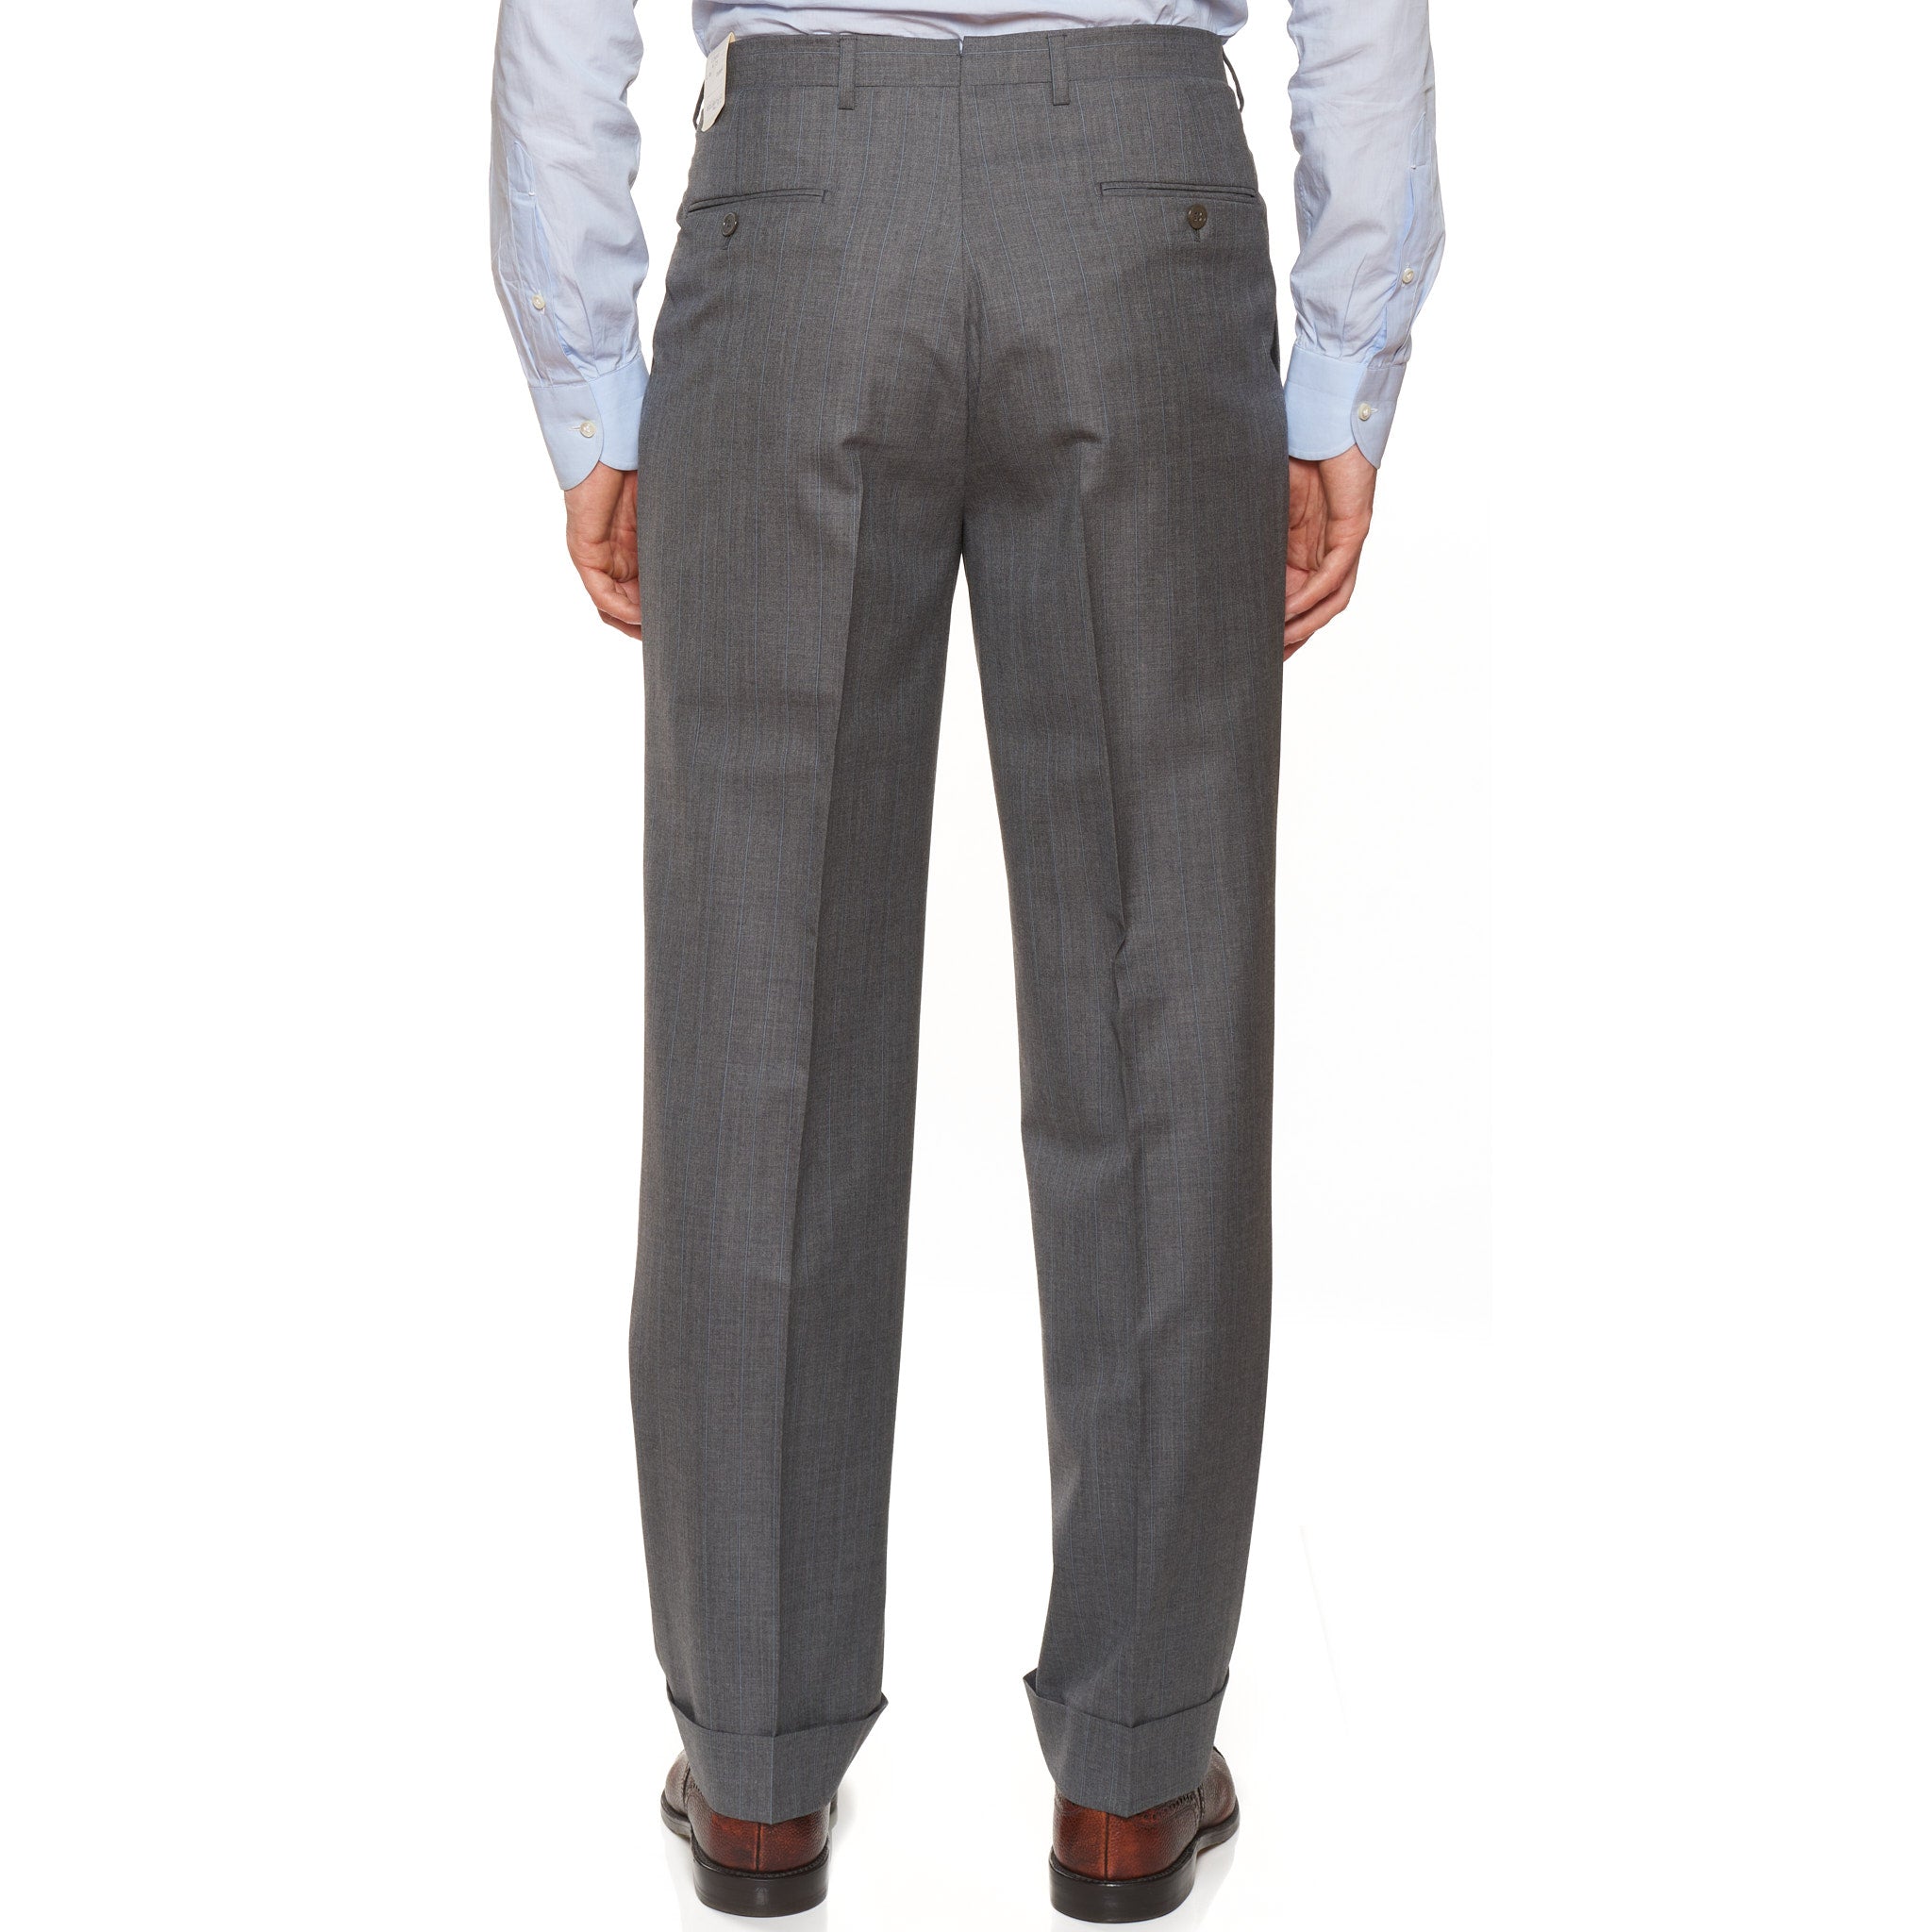 D'AVENZA Roma Handmade Gray Wool Super 120's DB Suit EU 52 NEW US 42